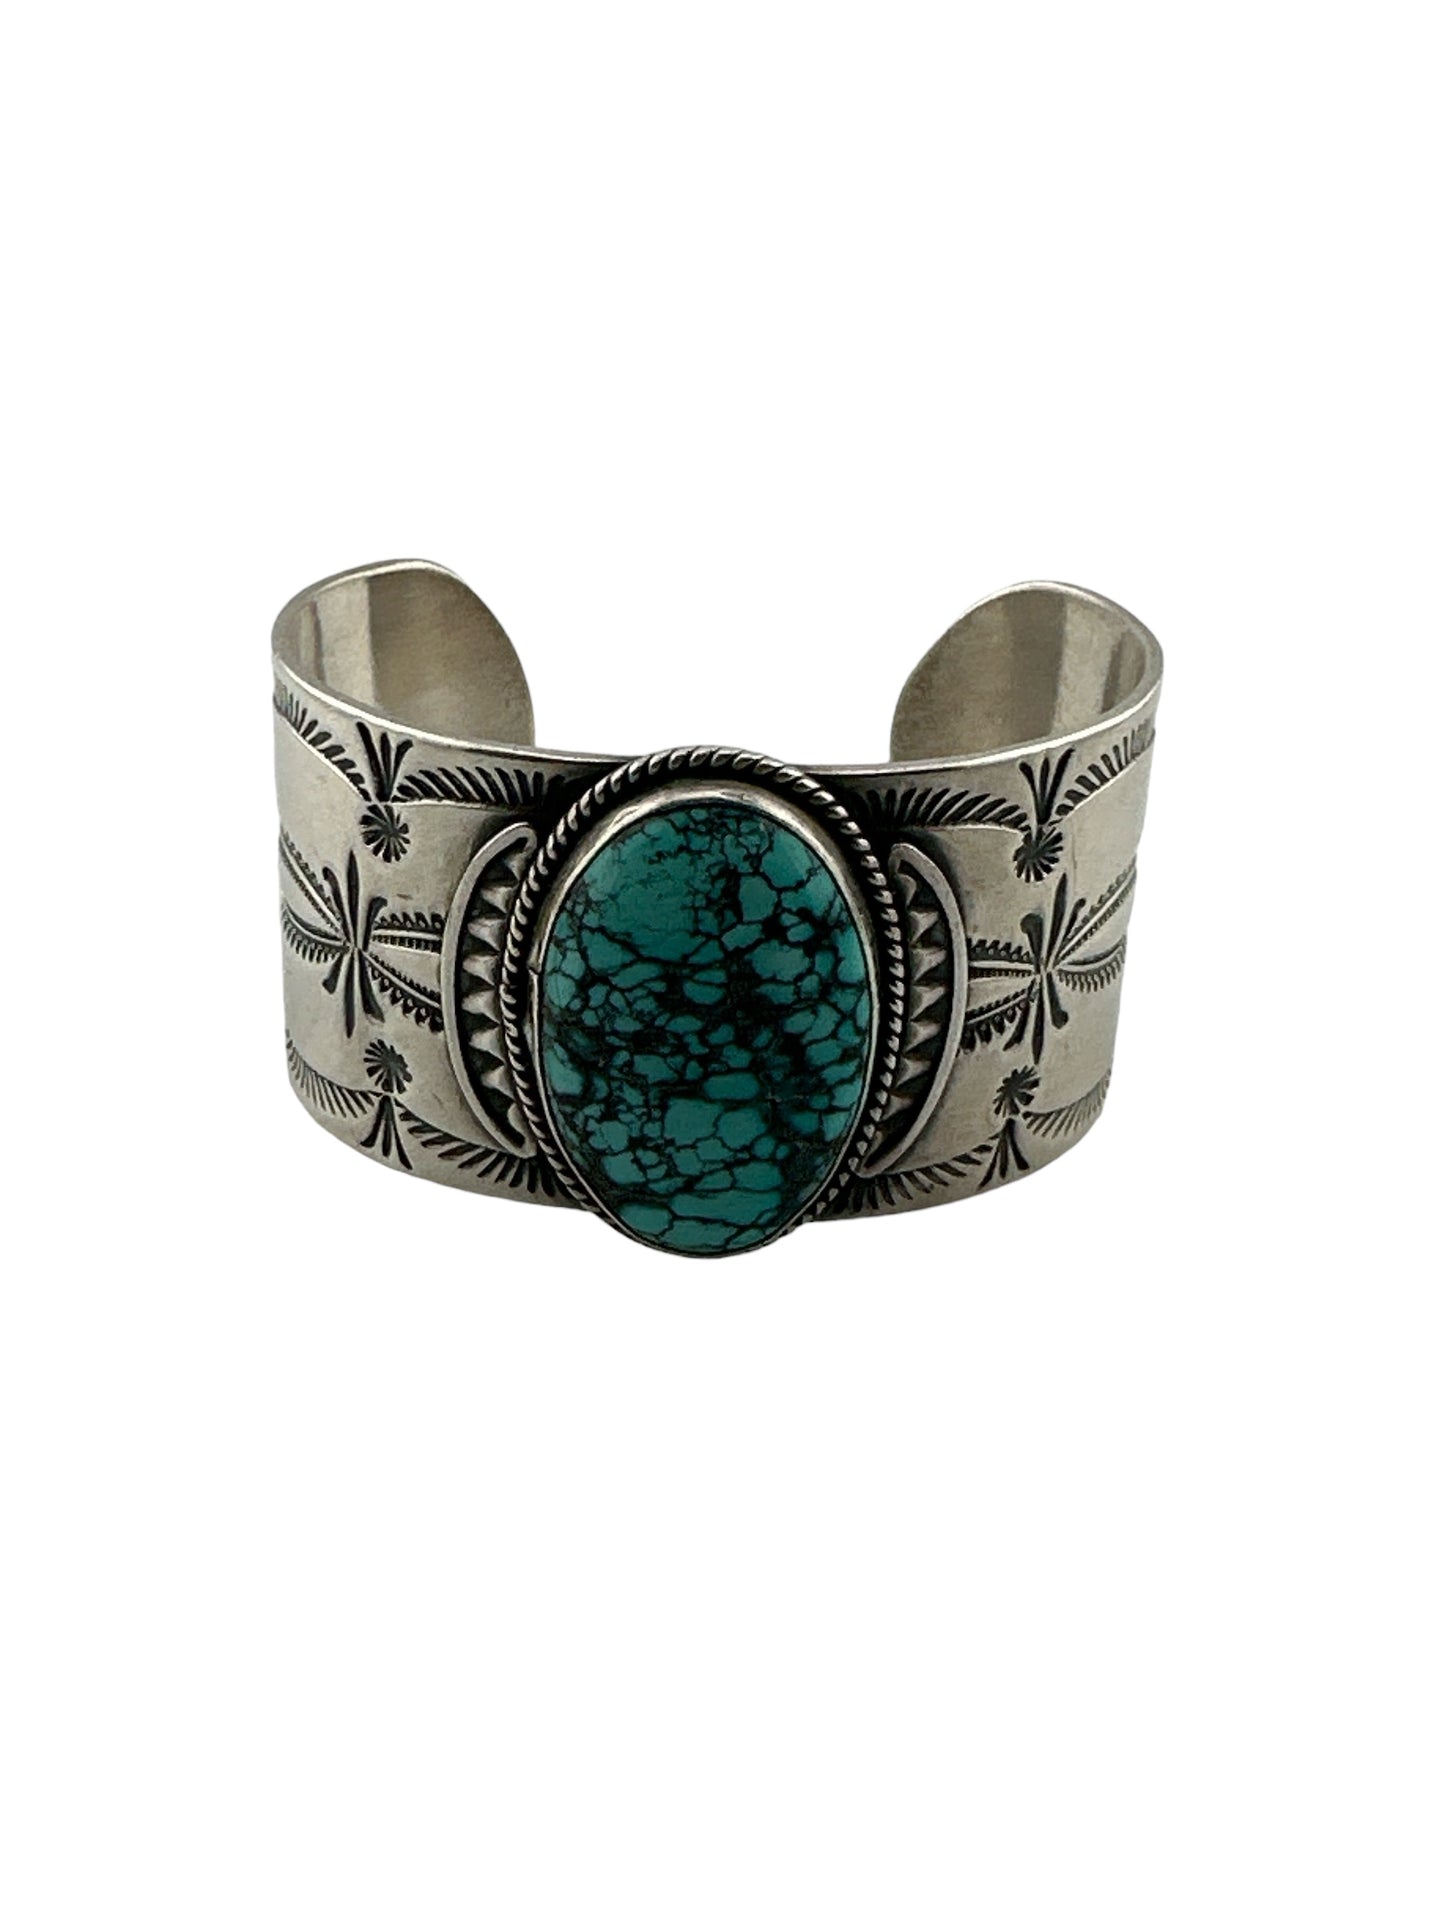 Wilson Begay Navajo Cuff Bracelet, turquoise jewelry for sale, authentic navajo jewelry for sale, telluride jewelry store, telluride gift shop